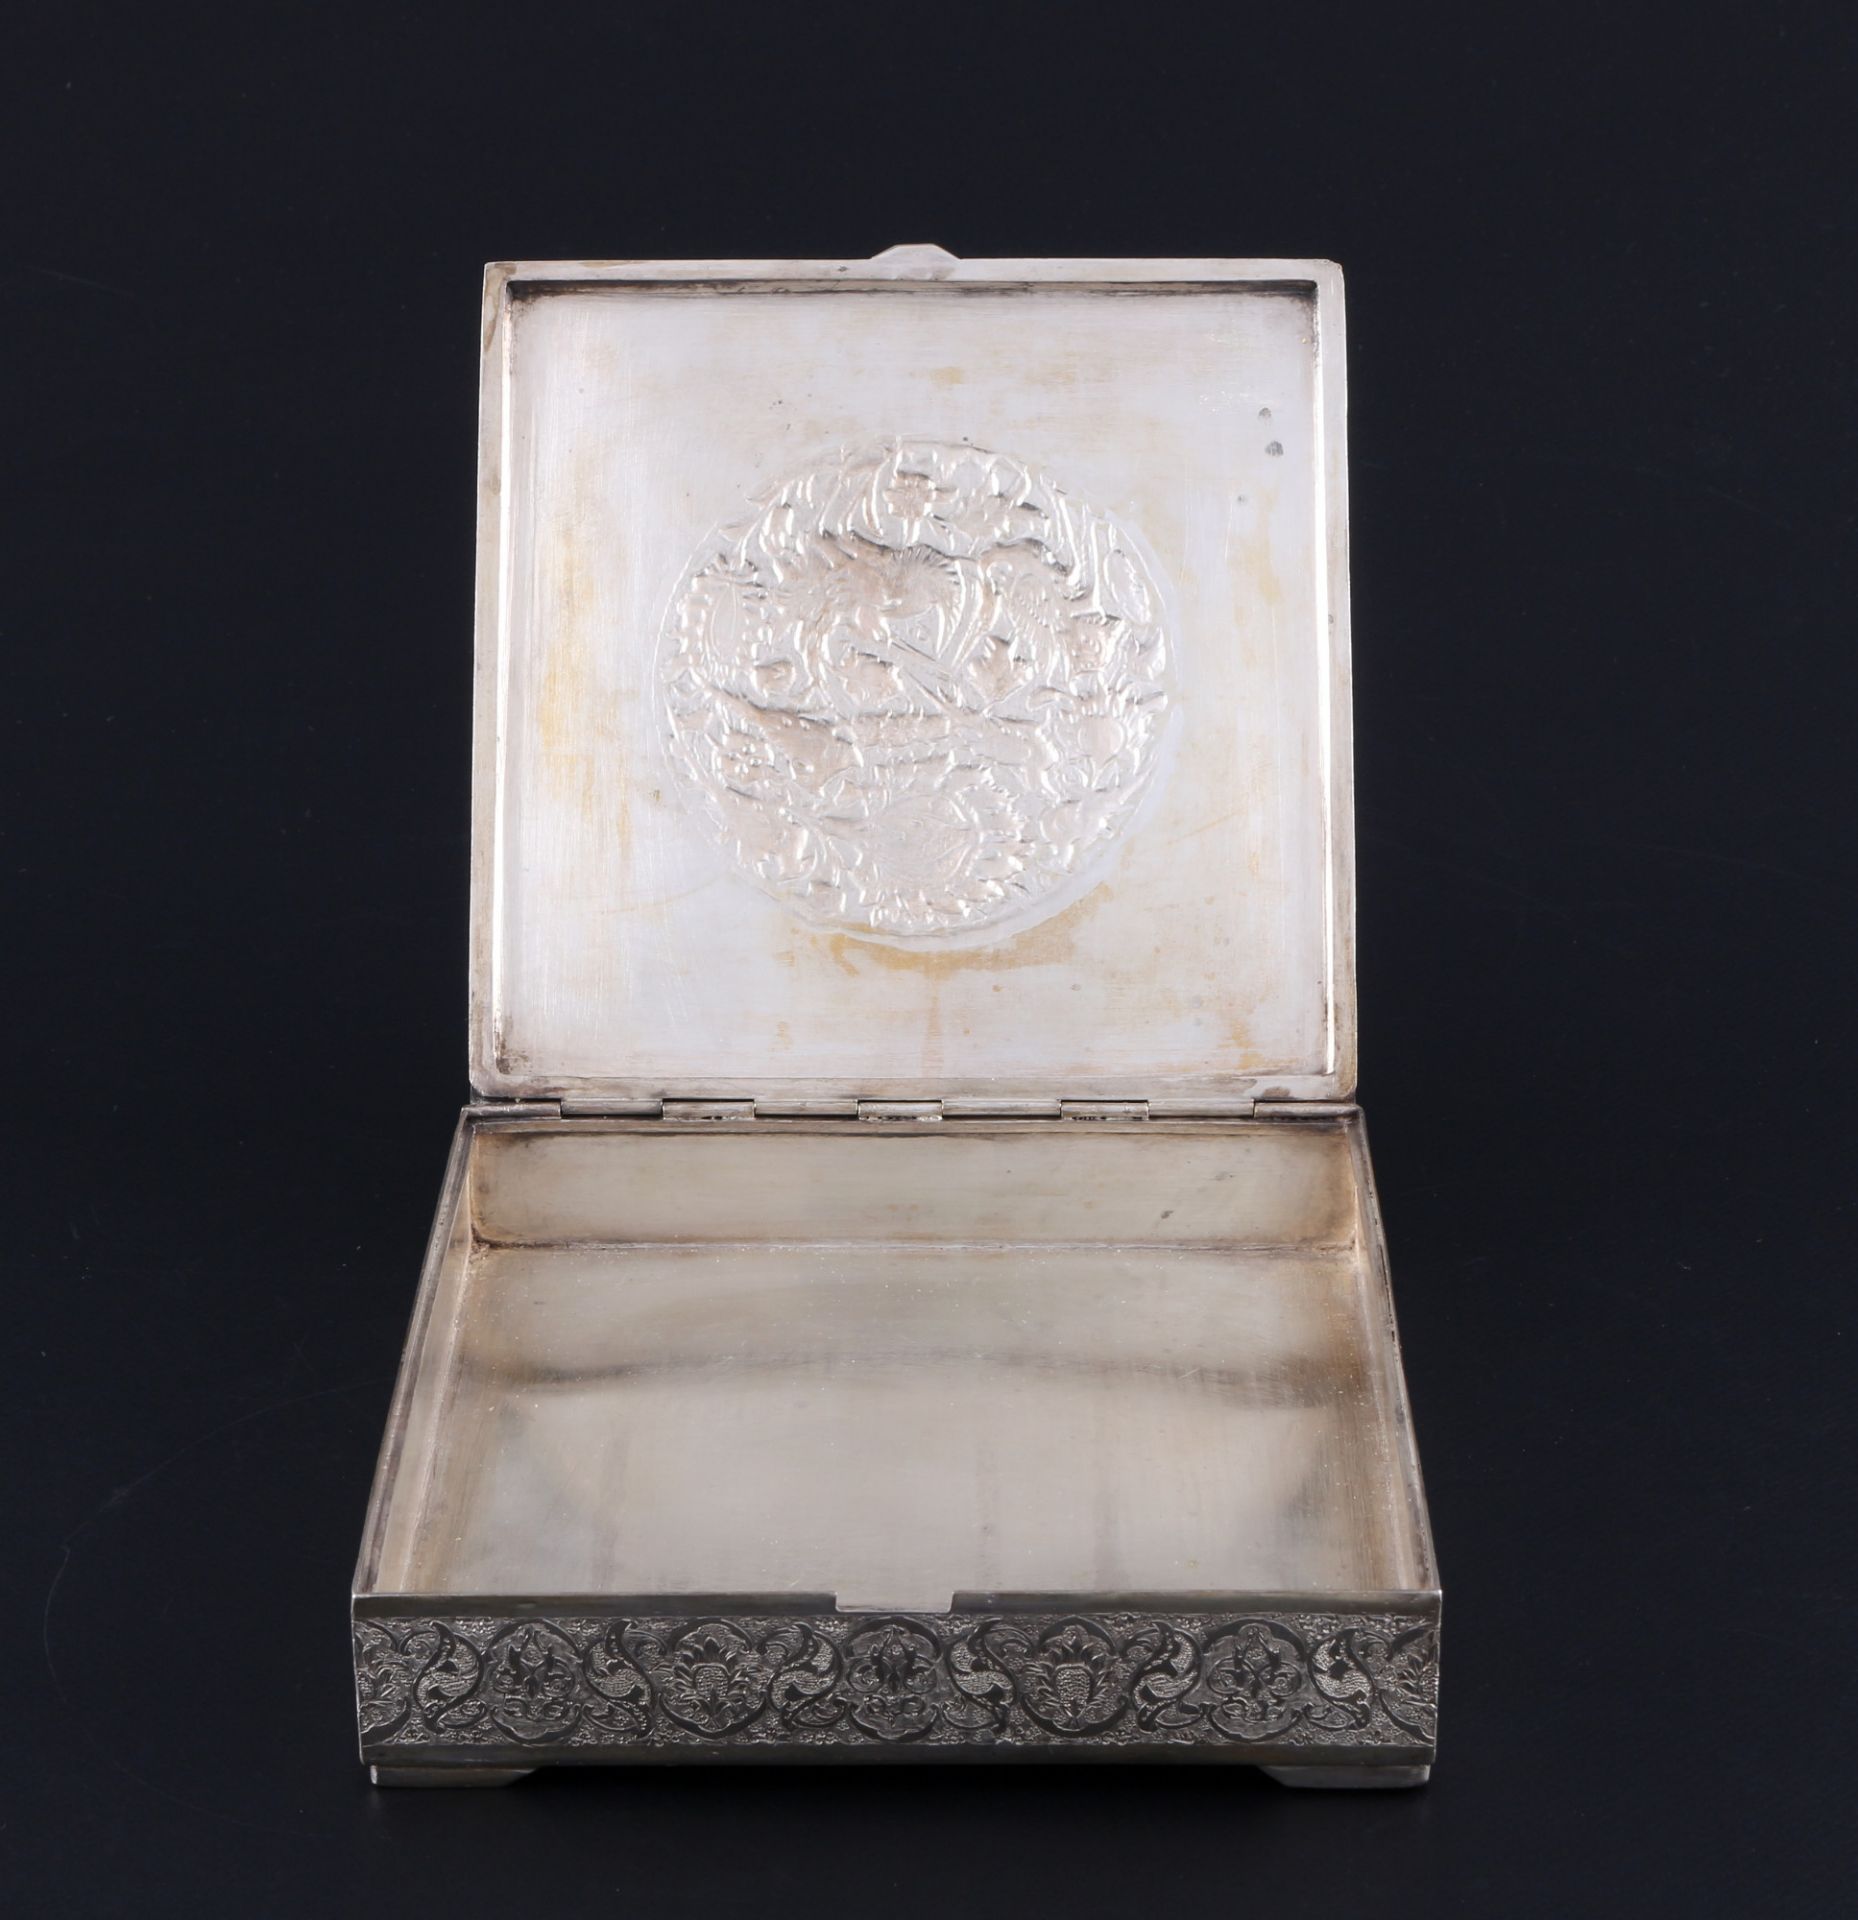 Silver persian lidded box, Silber persische Deckeldose, - Image 2 of 4